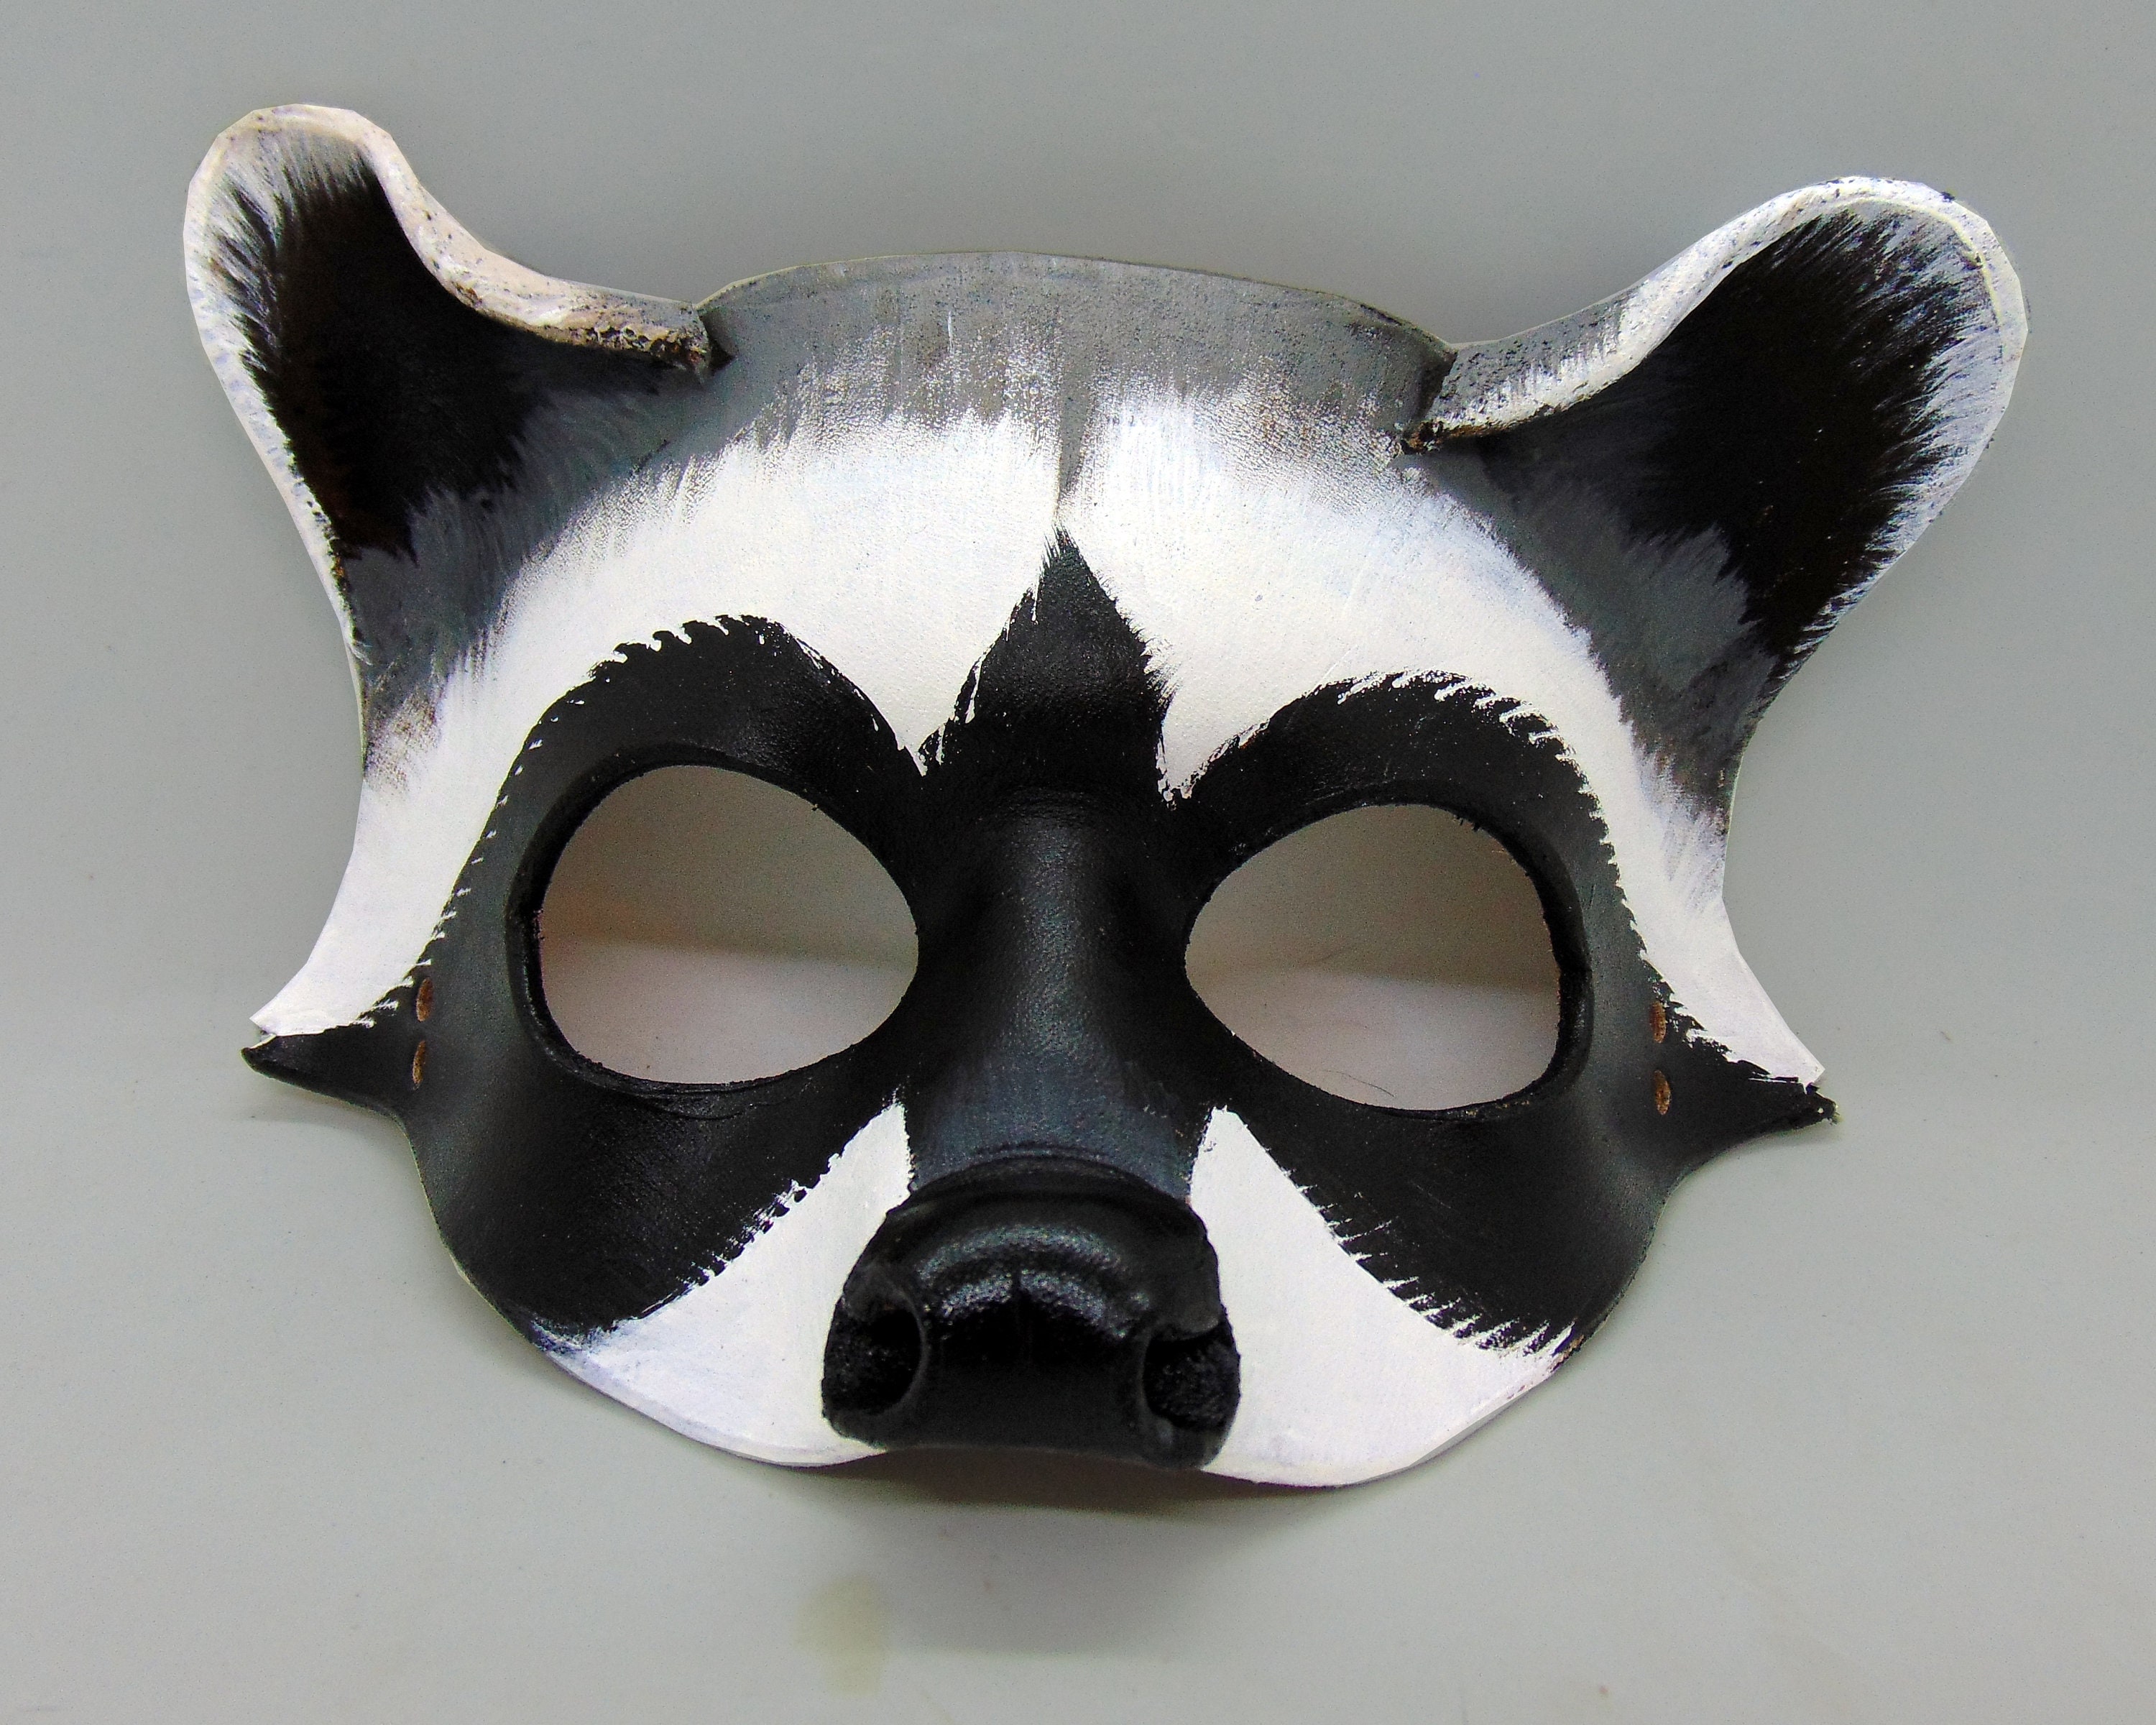 My Dream Therian Mask by Jackson-bunnyUwU on DeviantArt